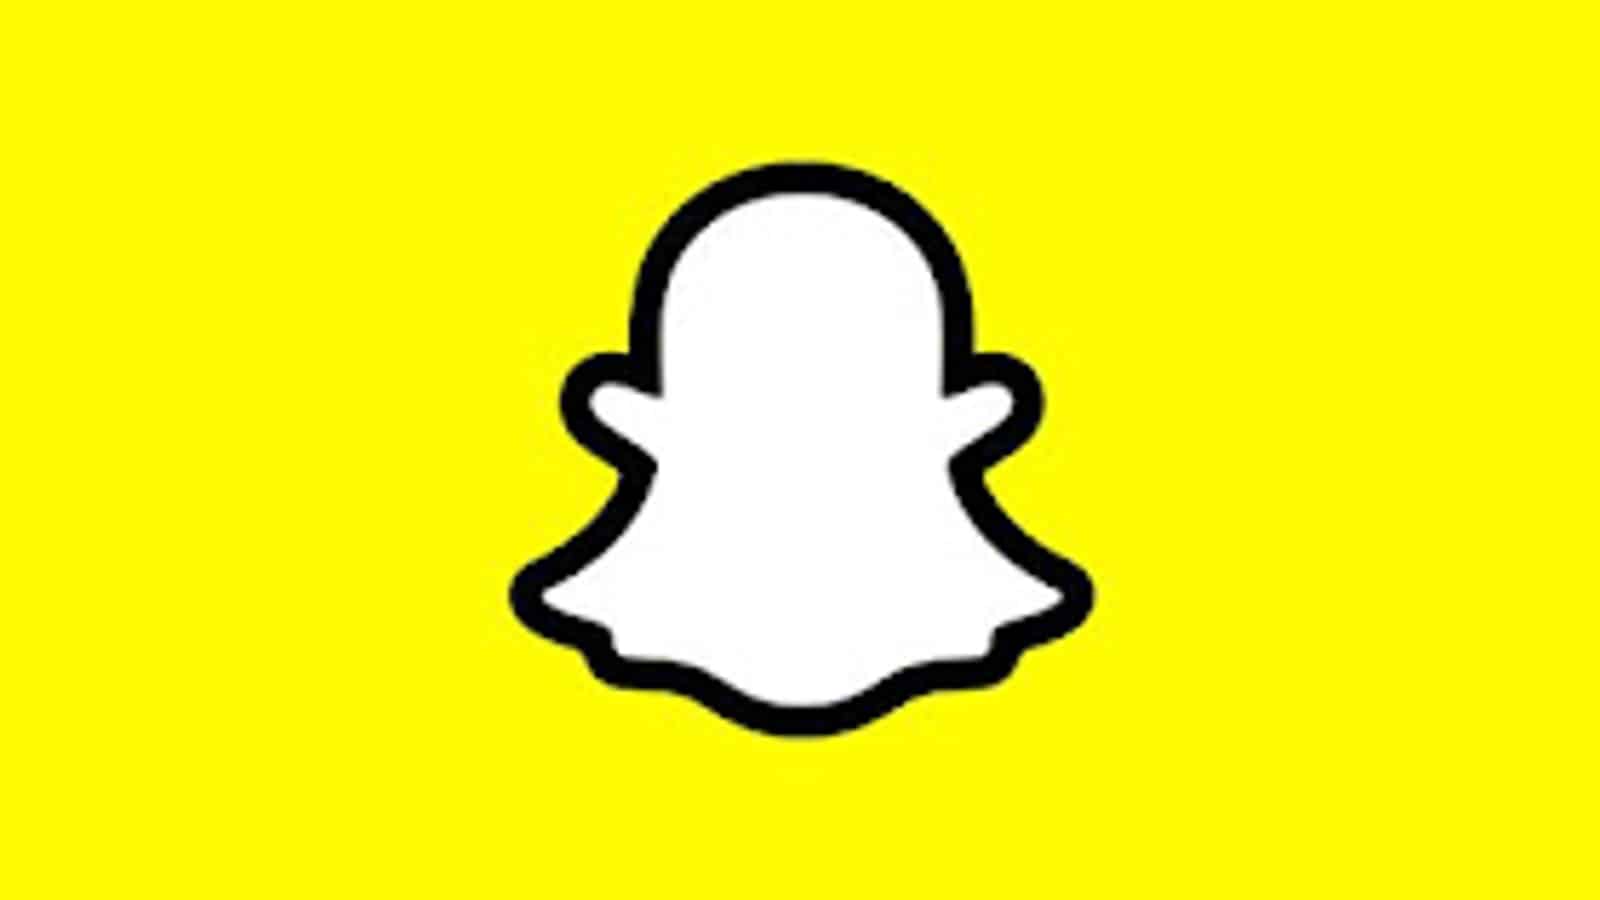 Snapchat logo on yellow background